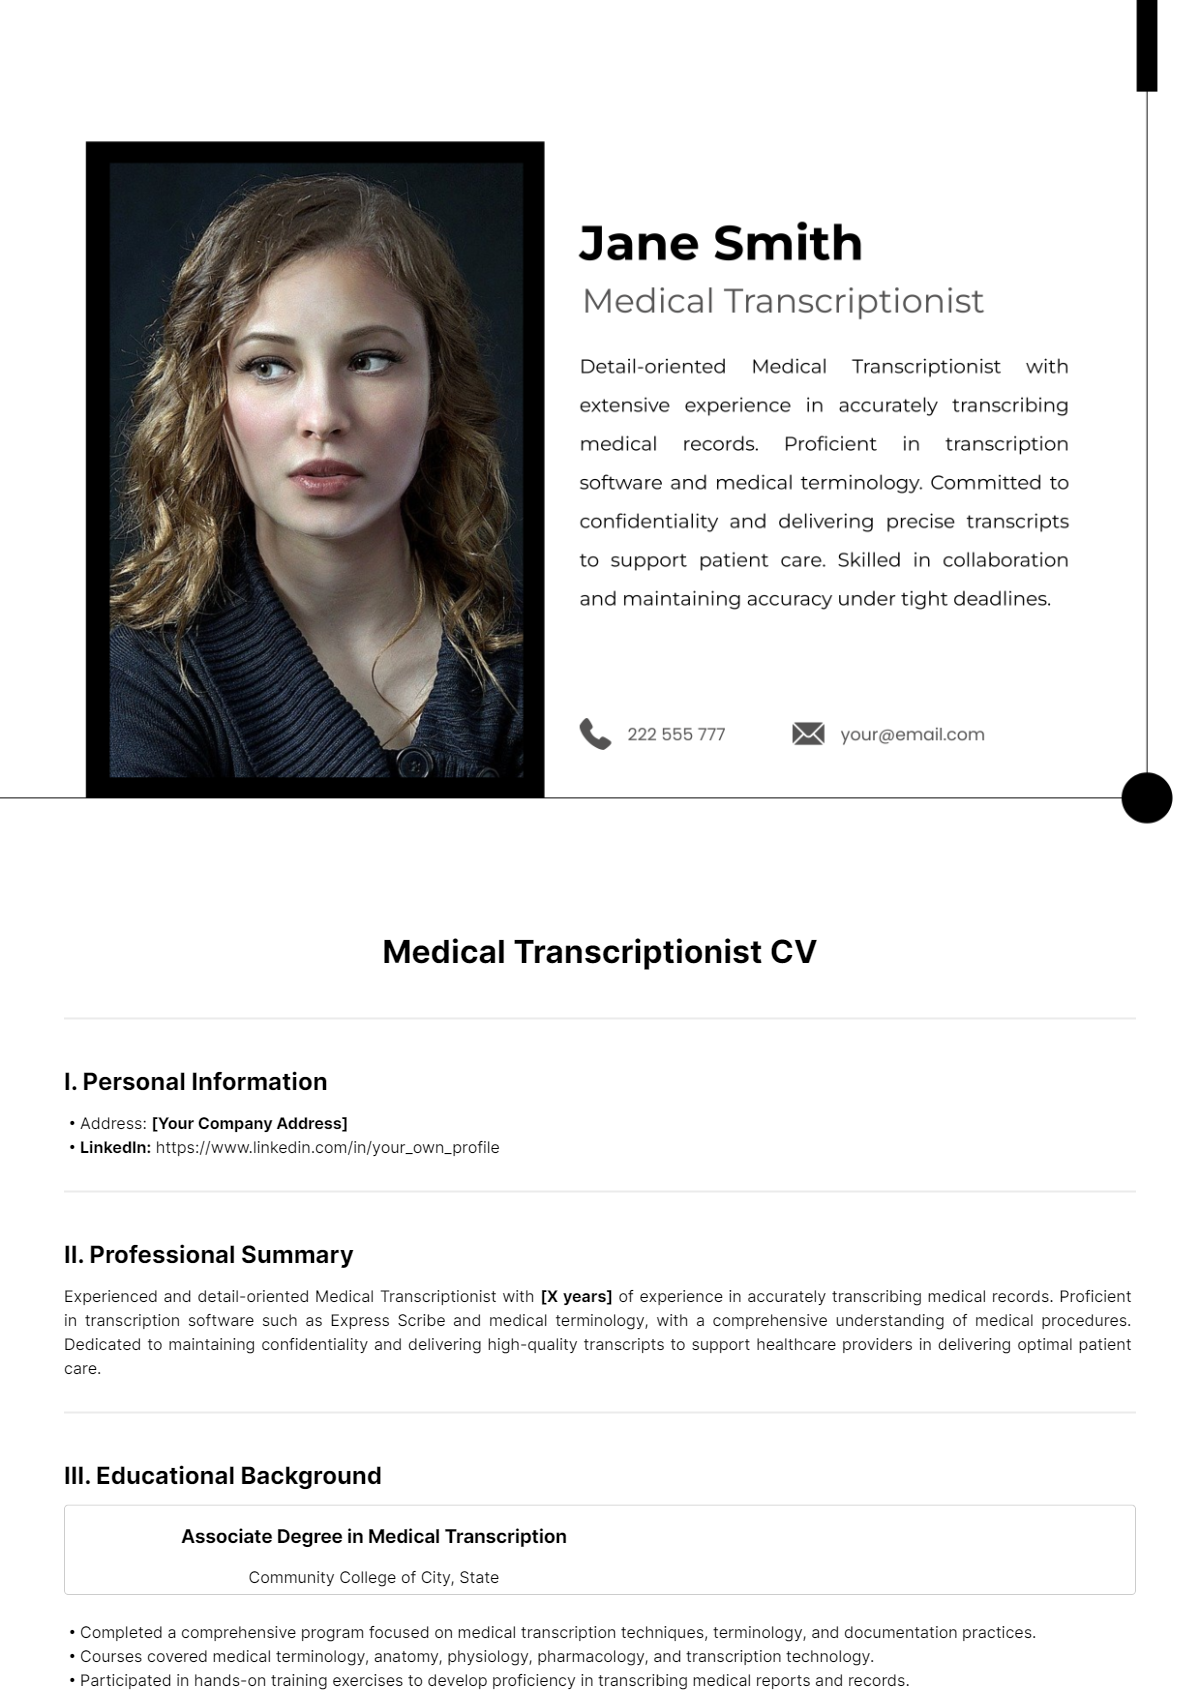 Medical Transcriptionist CV Template